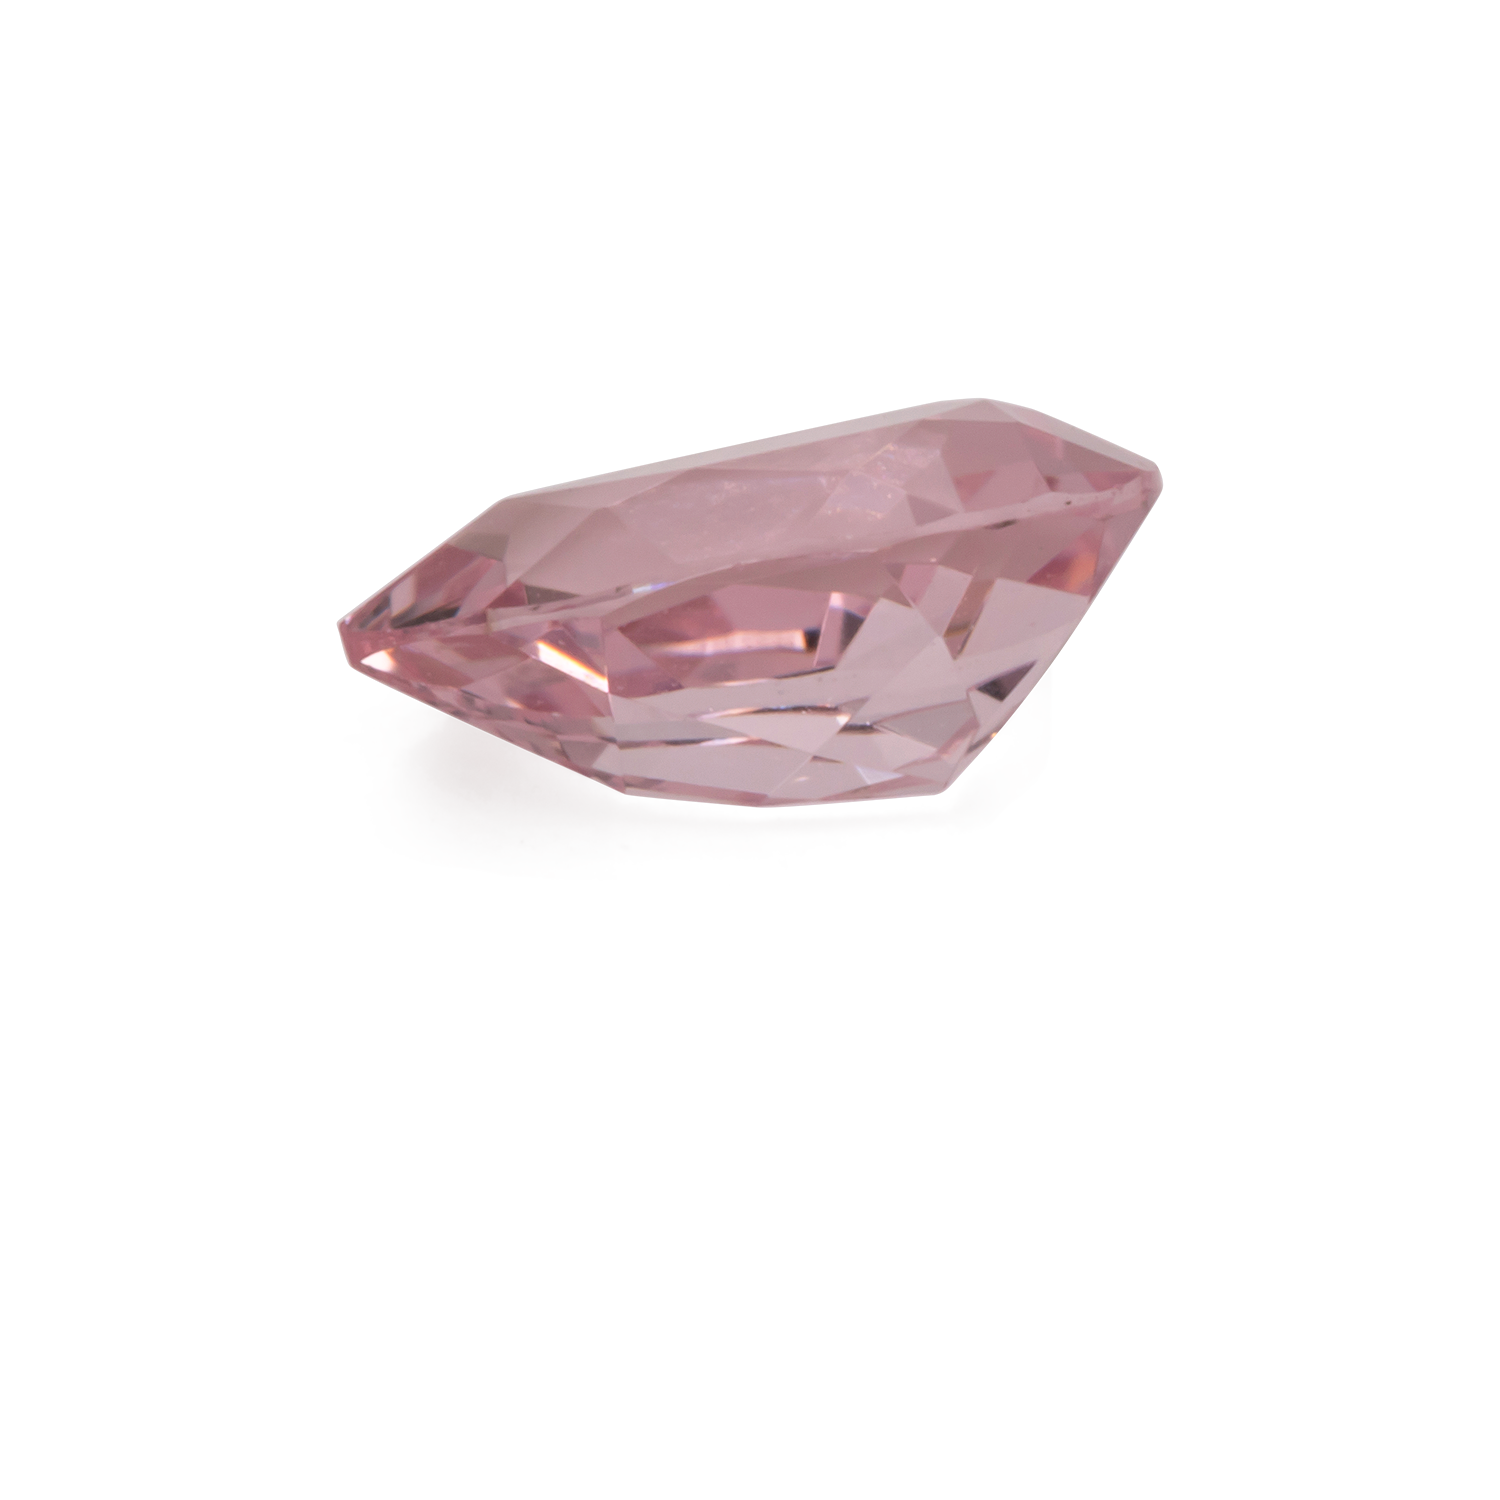 Morganite - pink, pearshape, 7x5 mm, 0.55 cts, No. MO32003